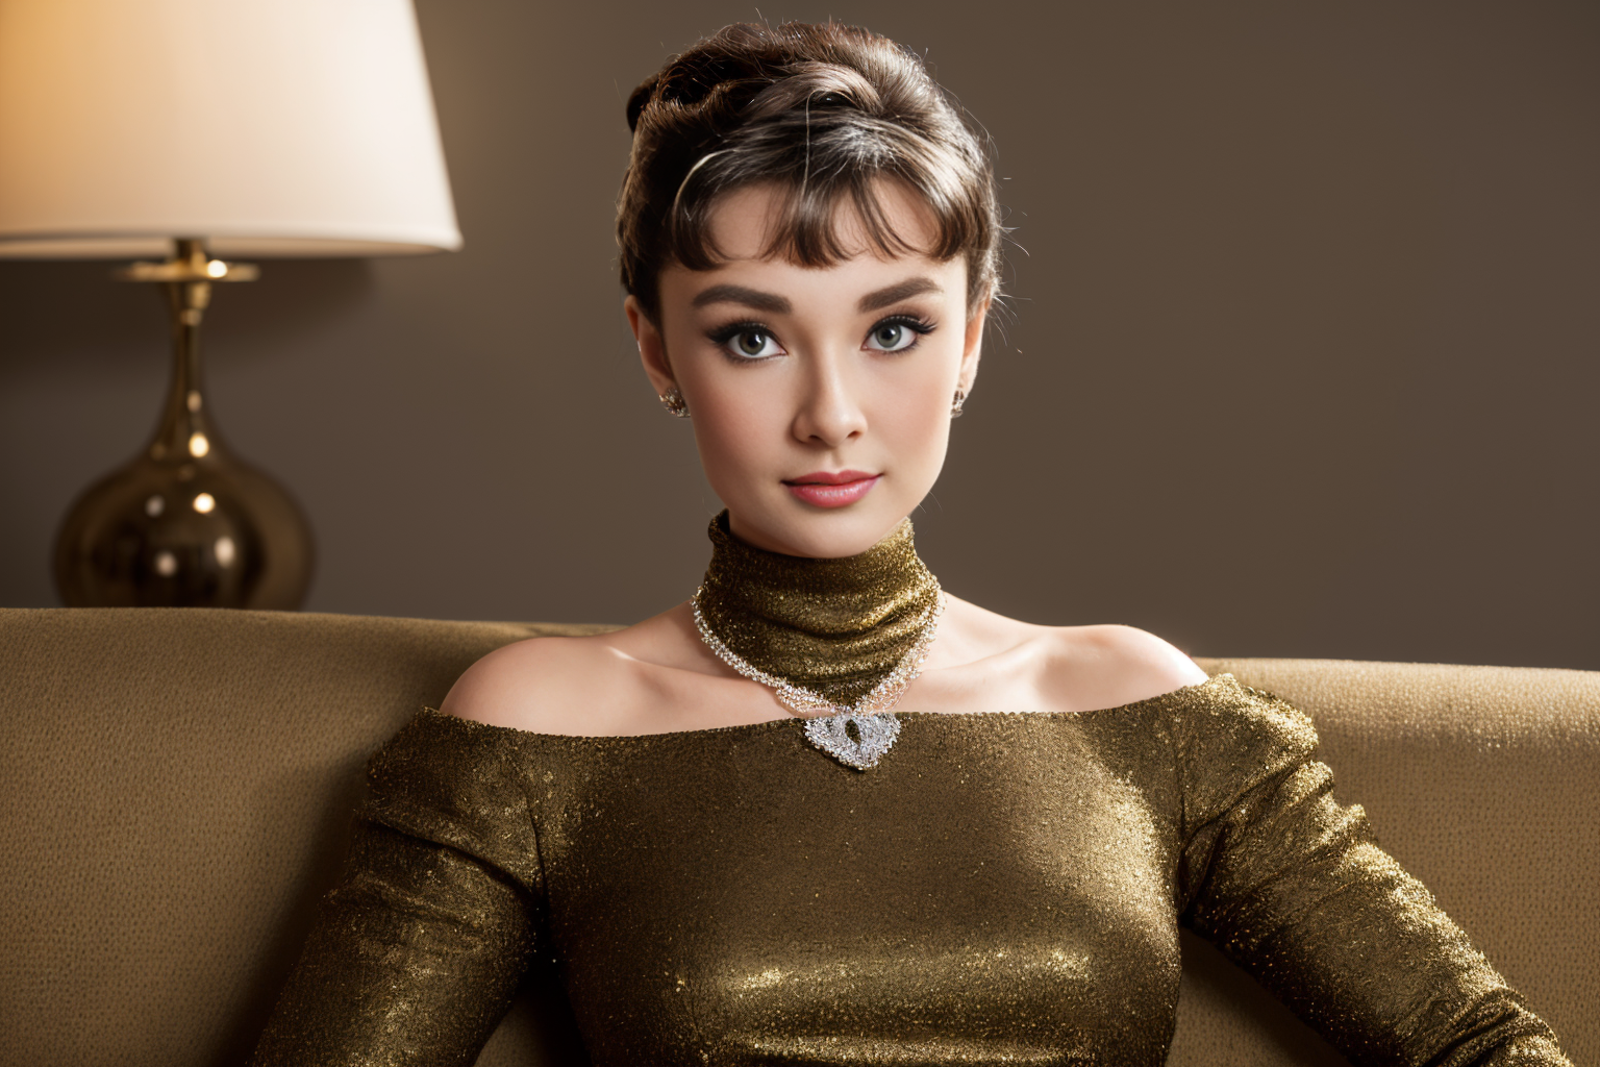 Audrey Hepburn image by Wiggin